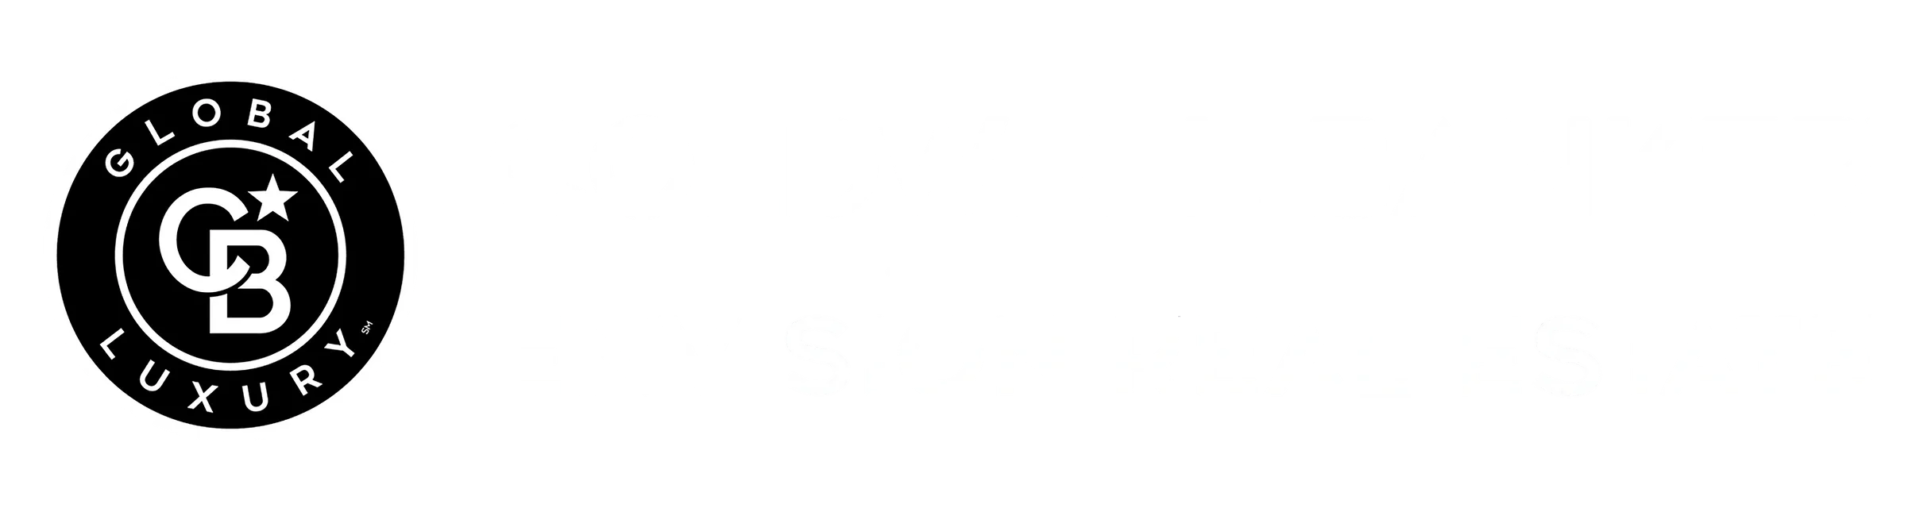 Coldwell Banker Envision Real Estate